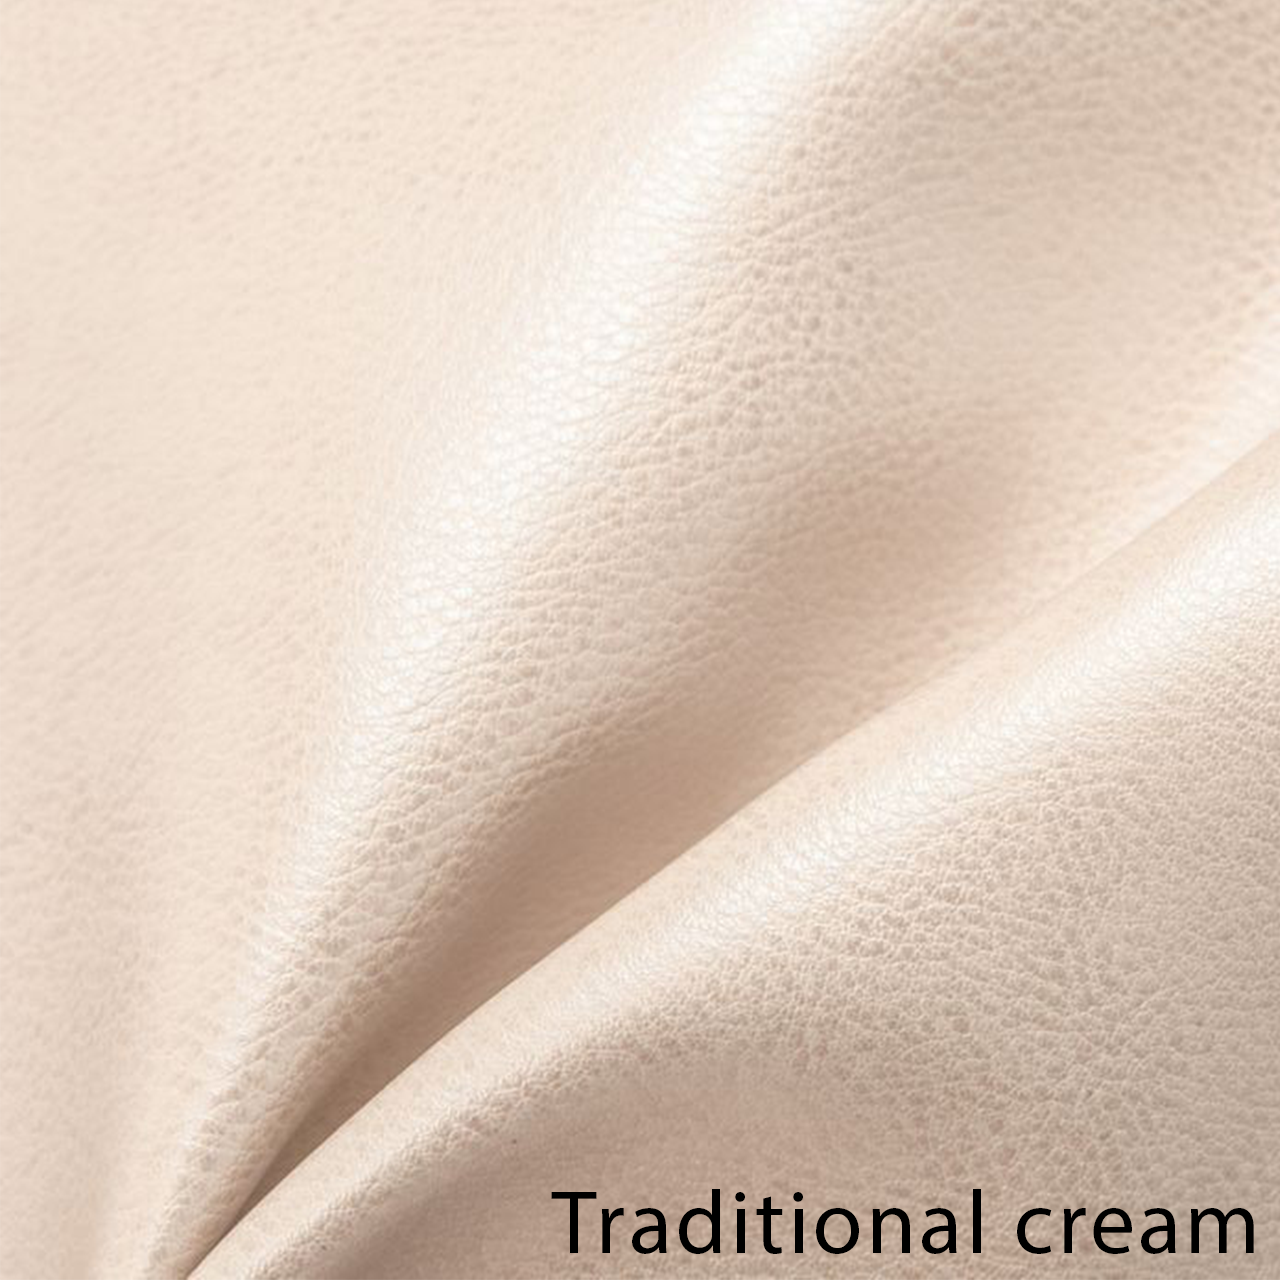 Traditional cream